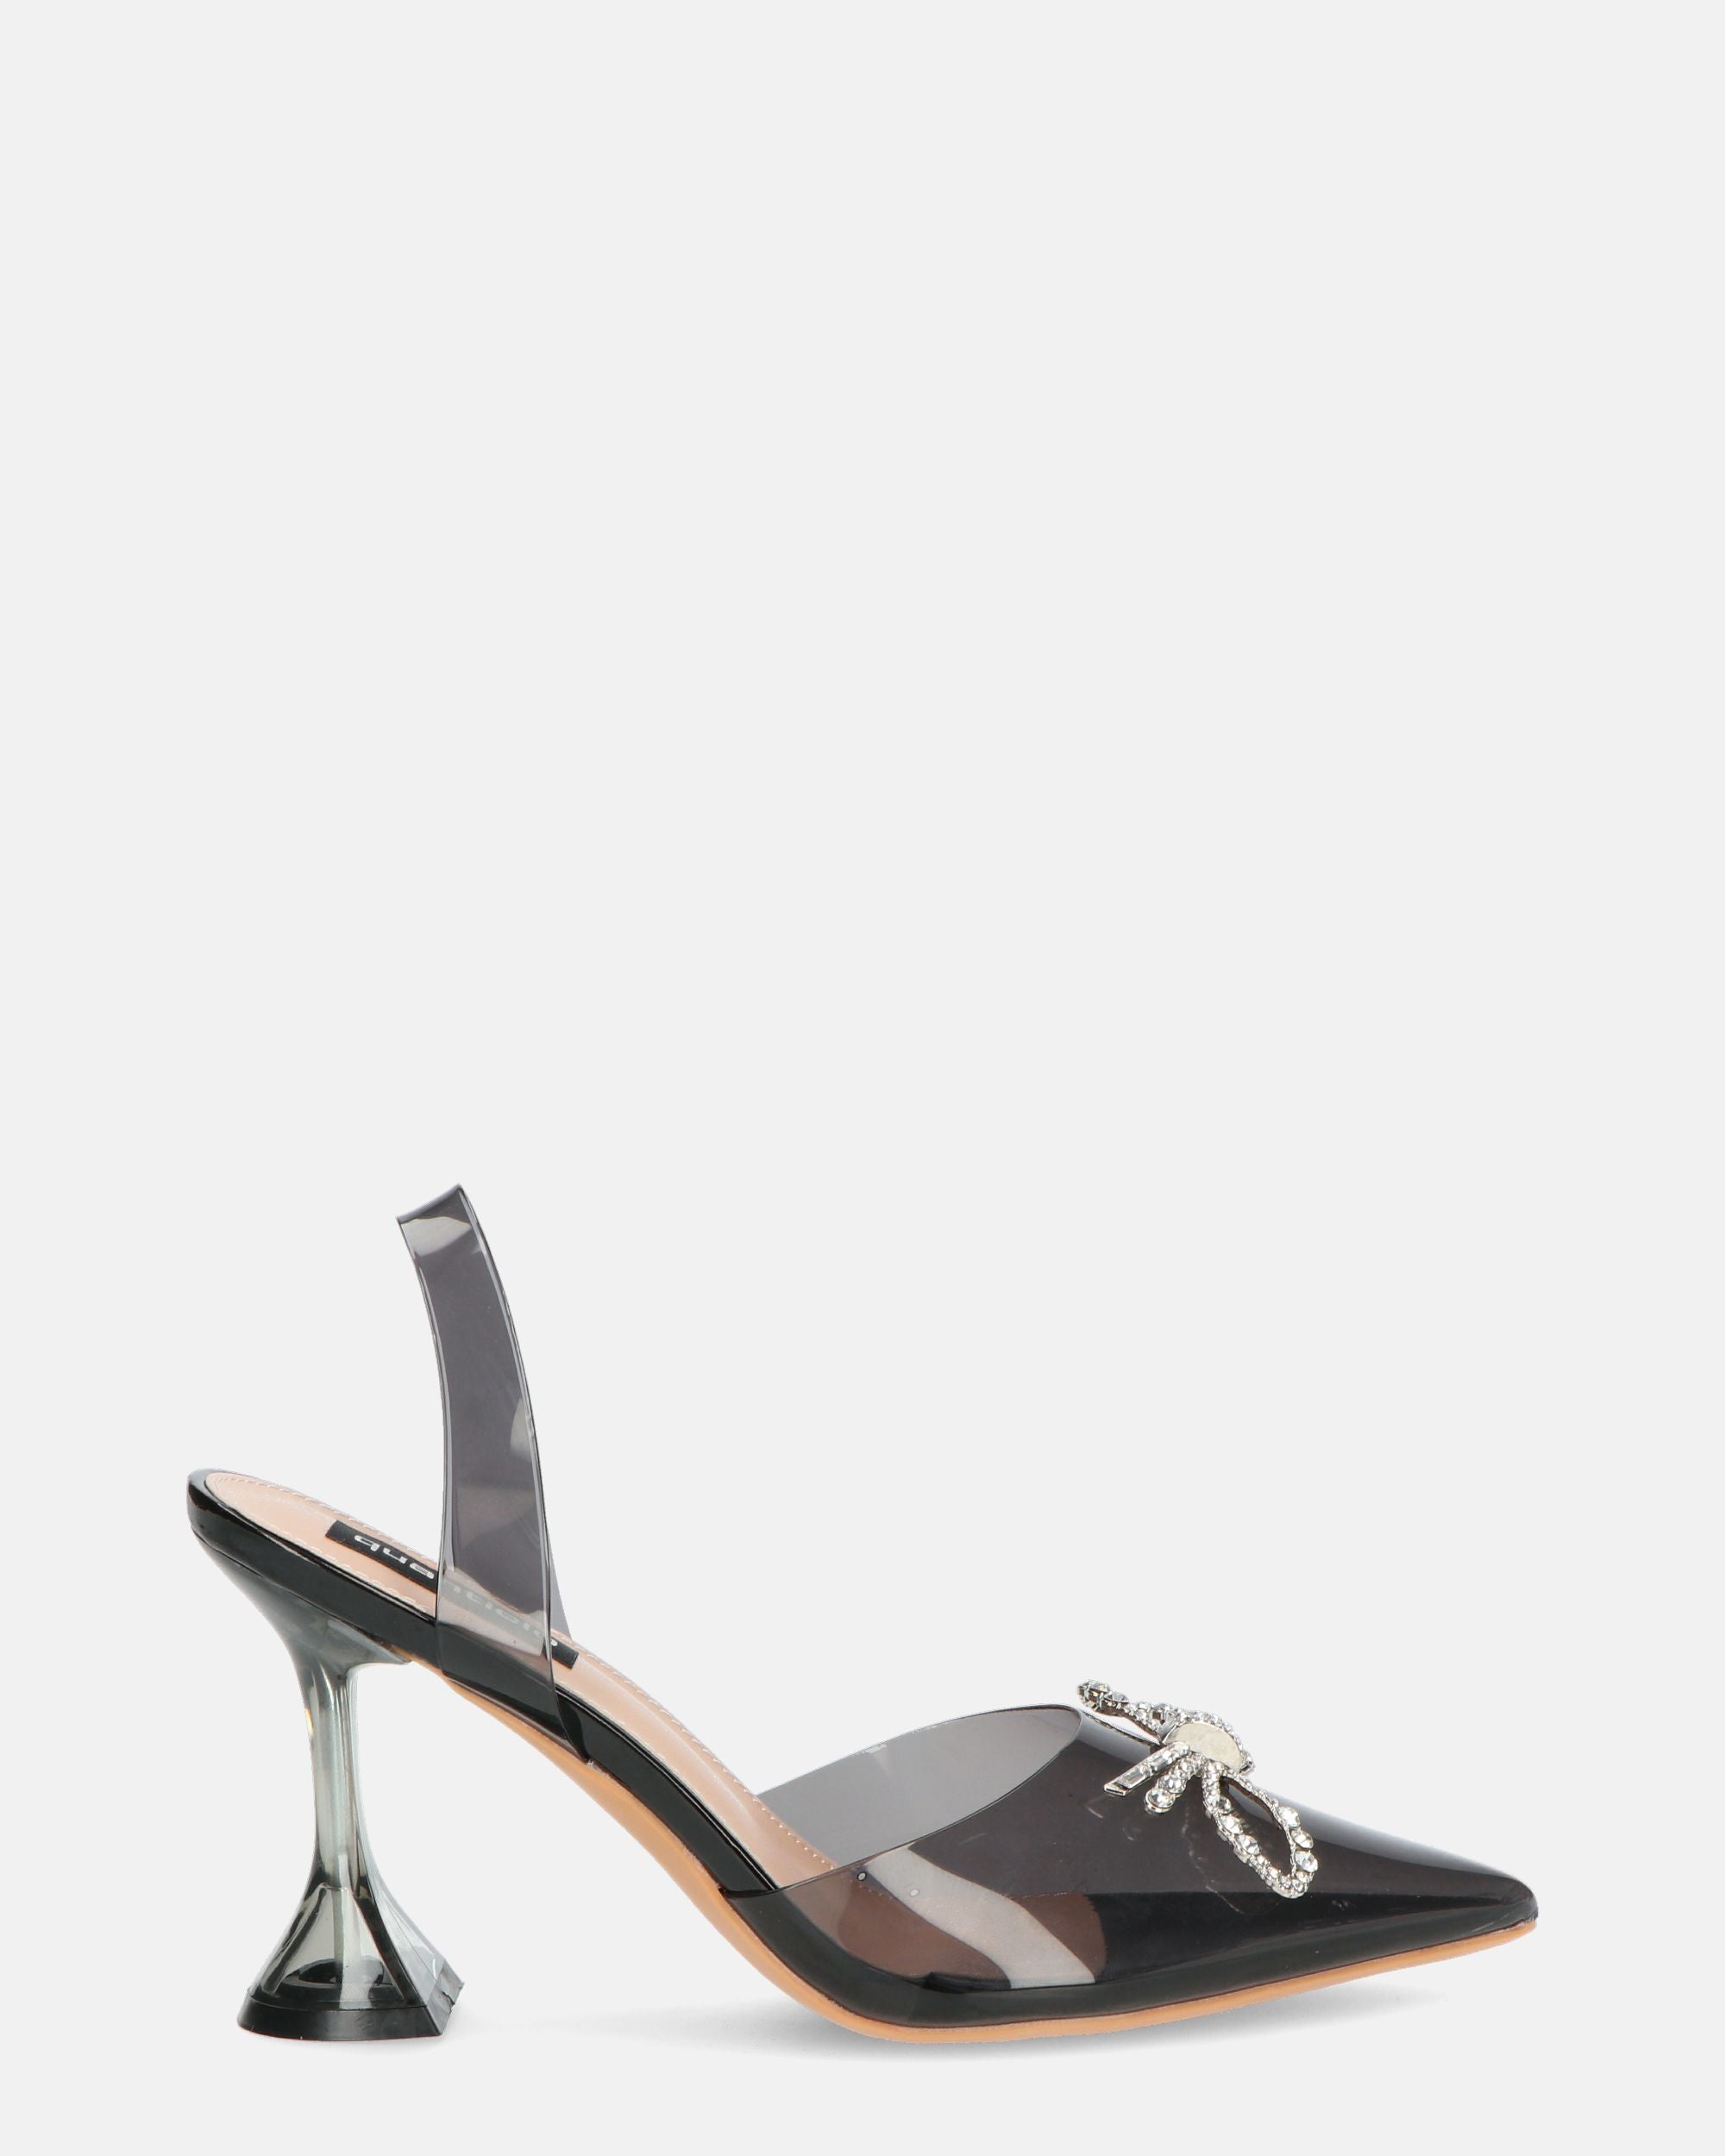 CONSUELO - black perspex heels with toe decorations